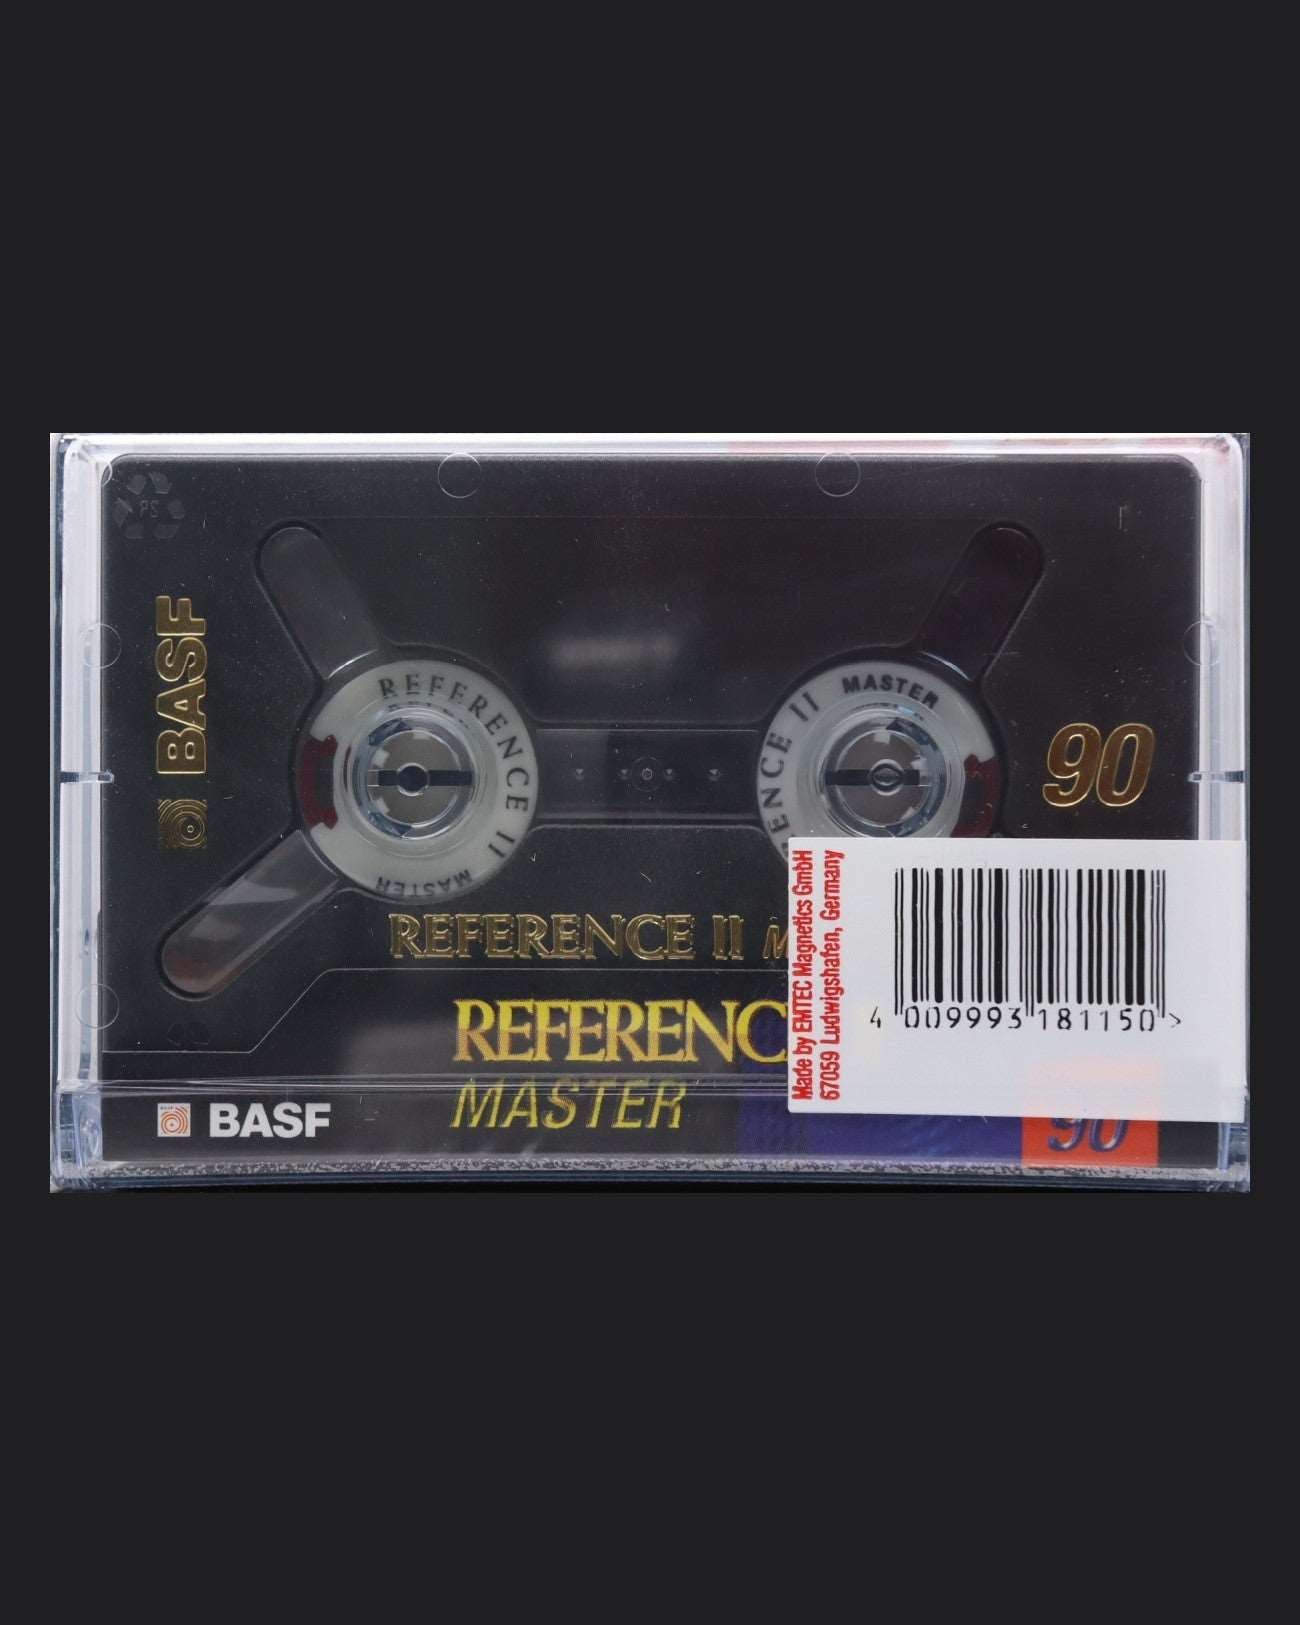 BASF Reference Master II (1995 DE)